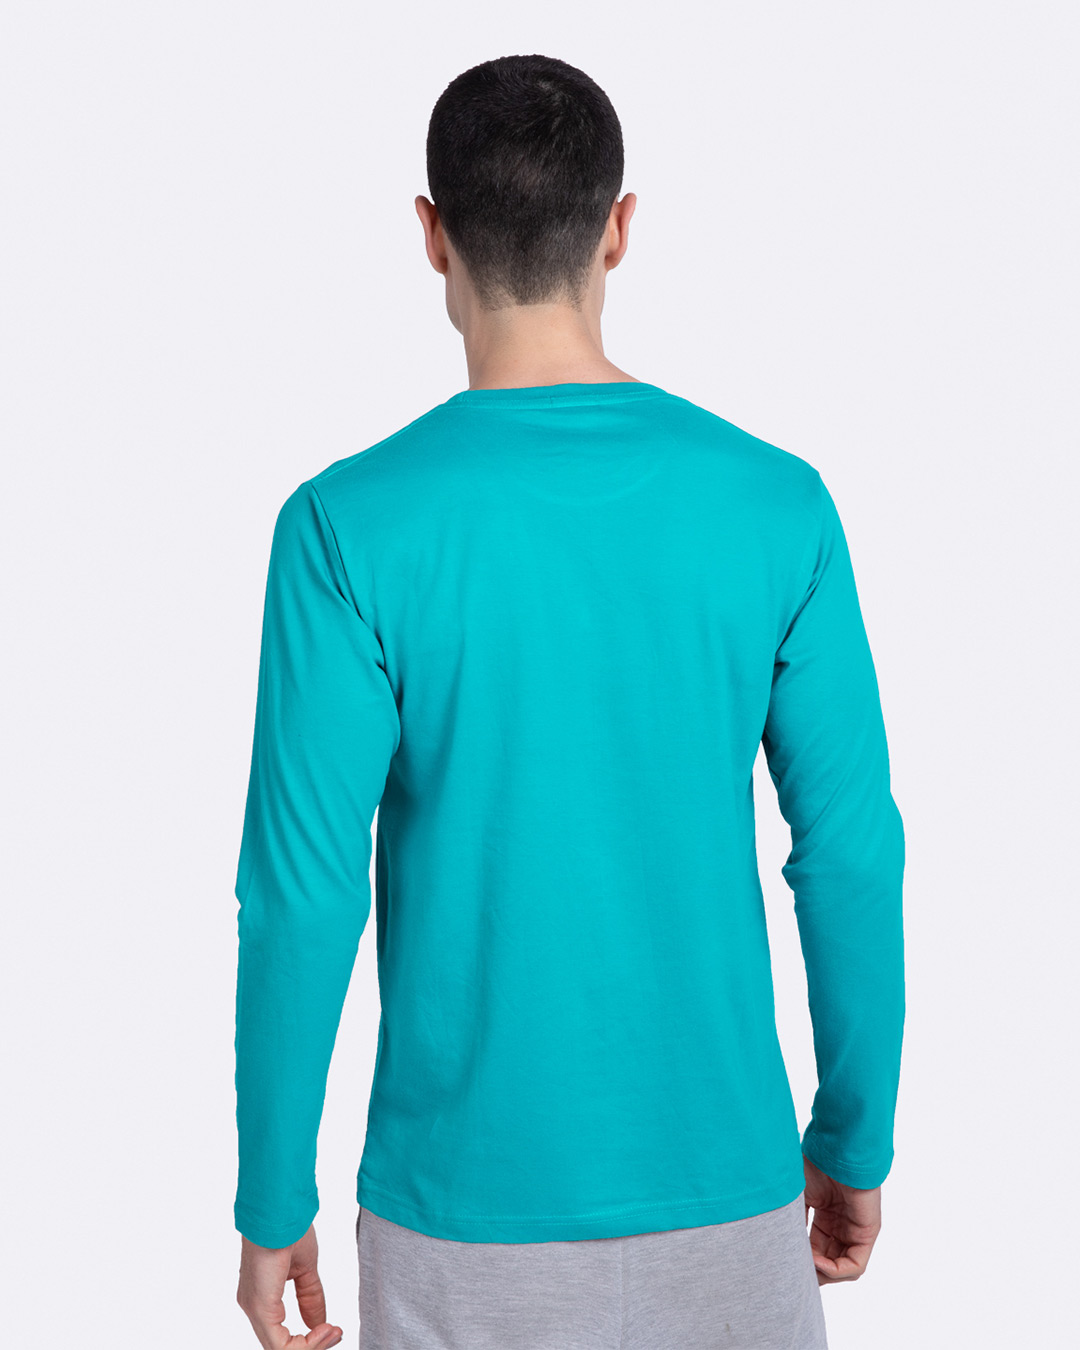 Shop Pocket Jerry Full Sleeves T-Shirt (TJL)-Back